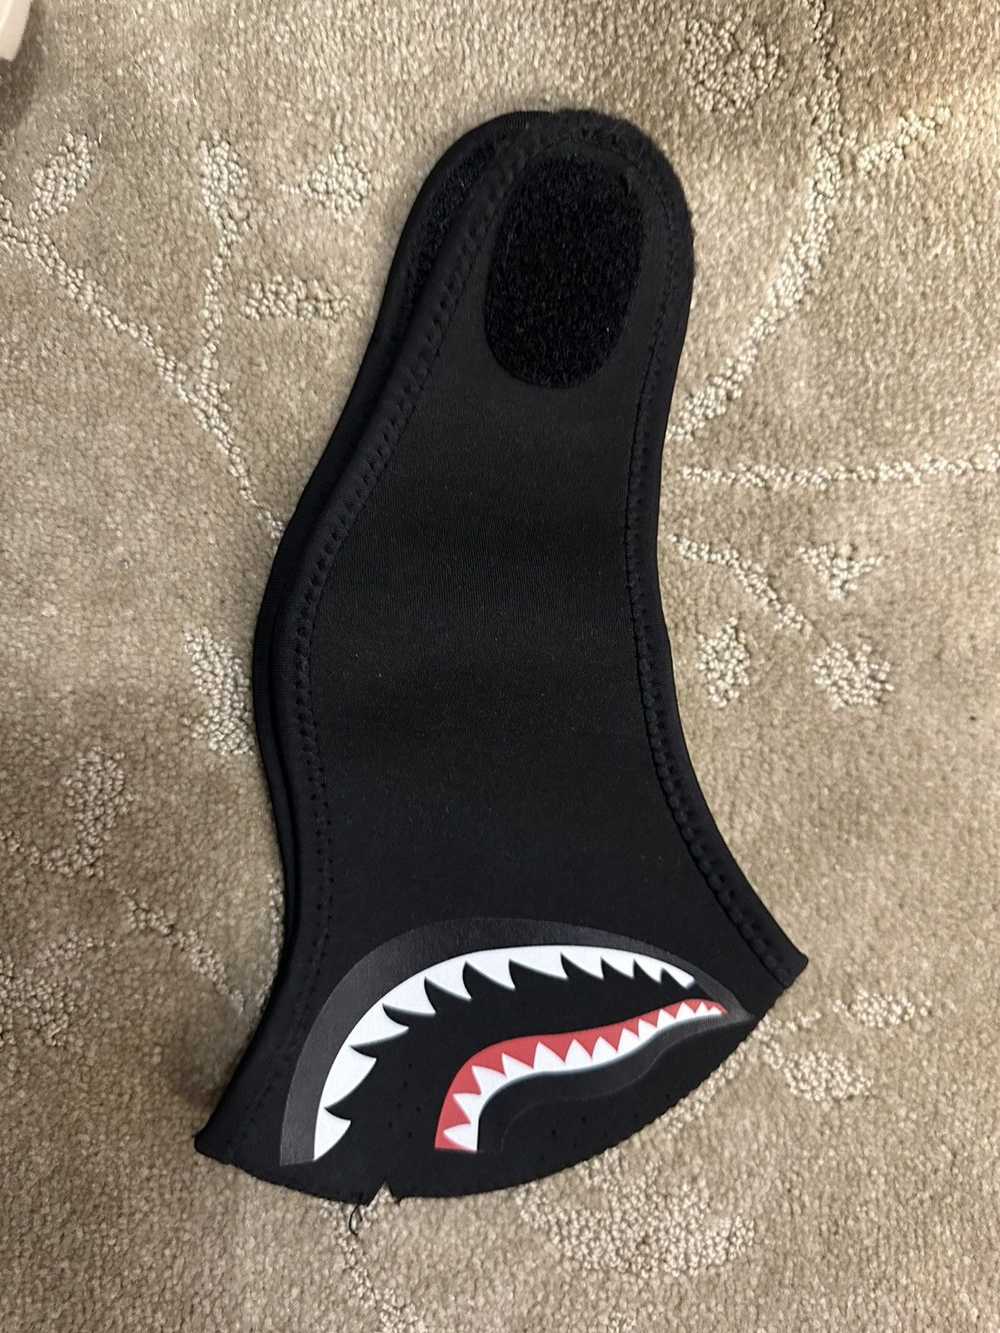 Bape 1st Camo Shark Face Mask - image 2